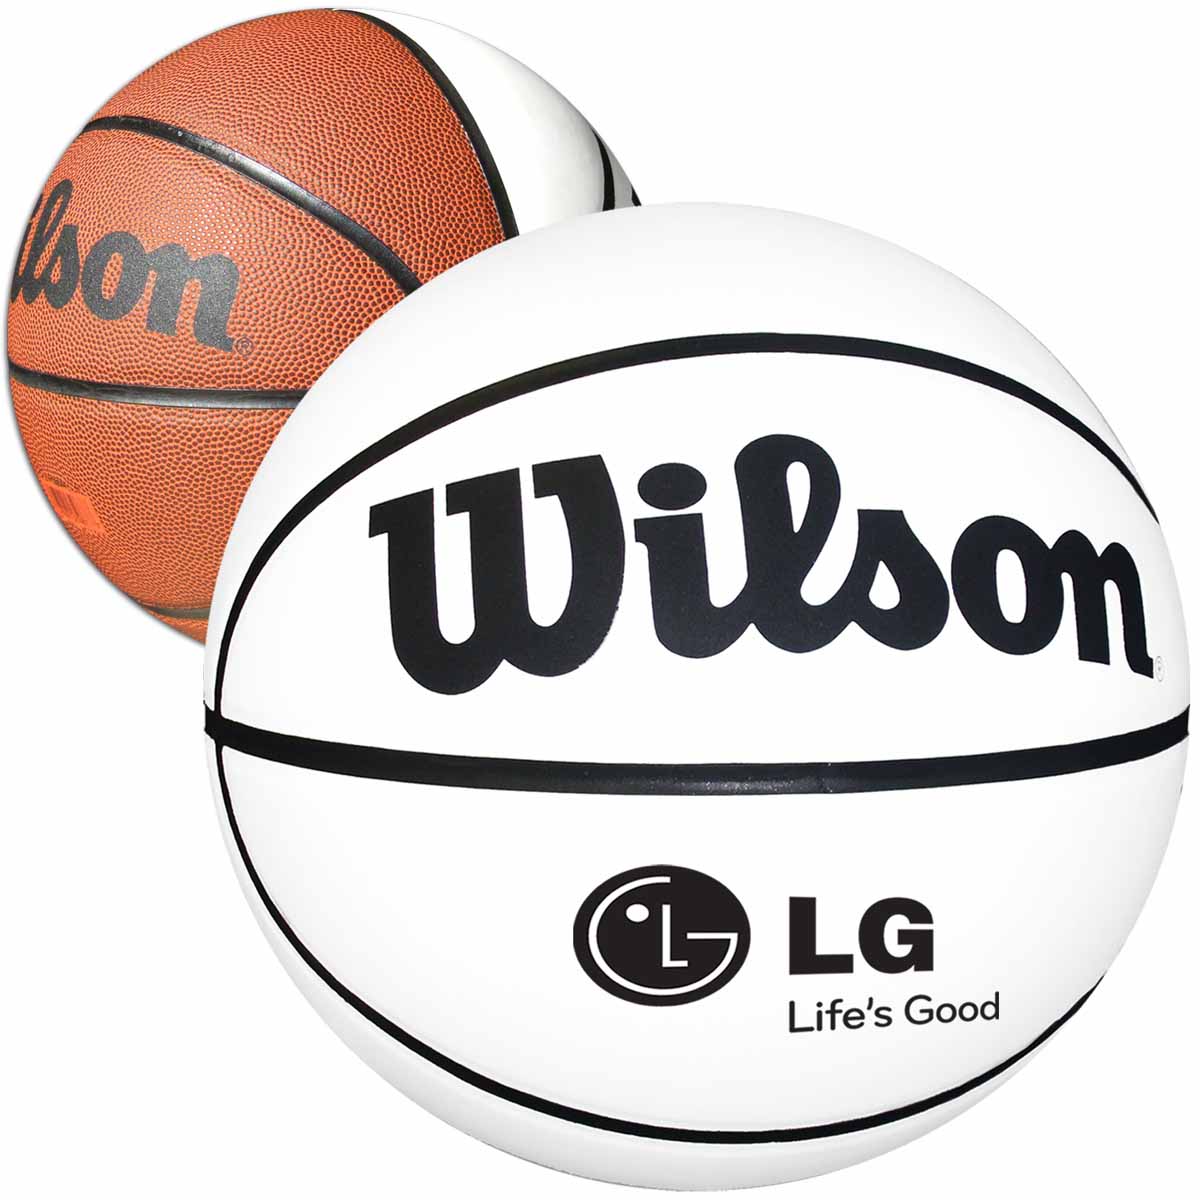 9" Wilson Signature Basketballs (Full-Size)